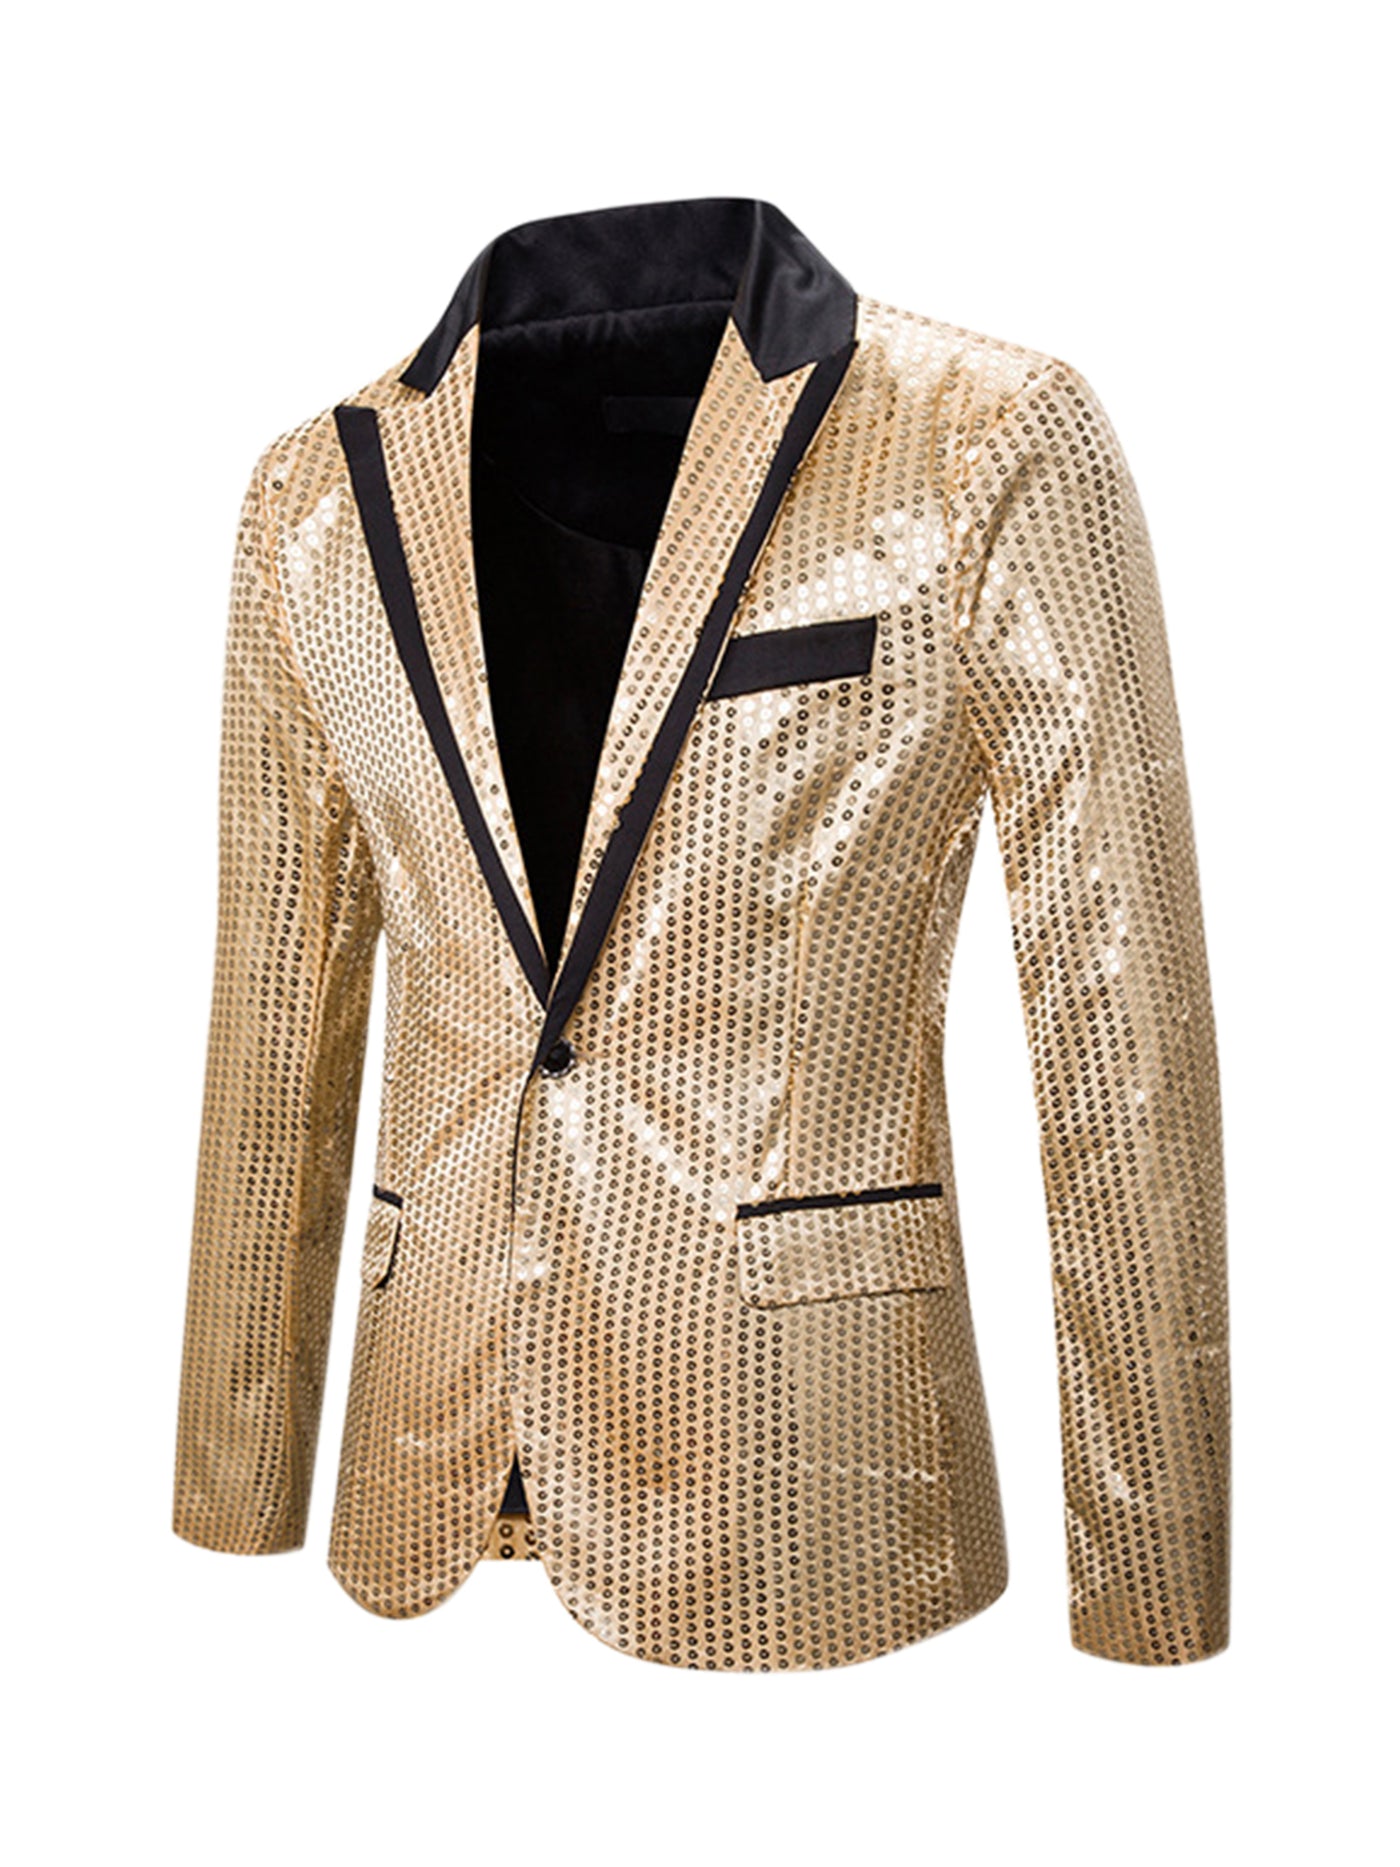 Bublédon Men's Sequin Blazer Peak Lapel Shiny Wedding Party Tuxedo Sports Coat